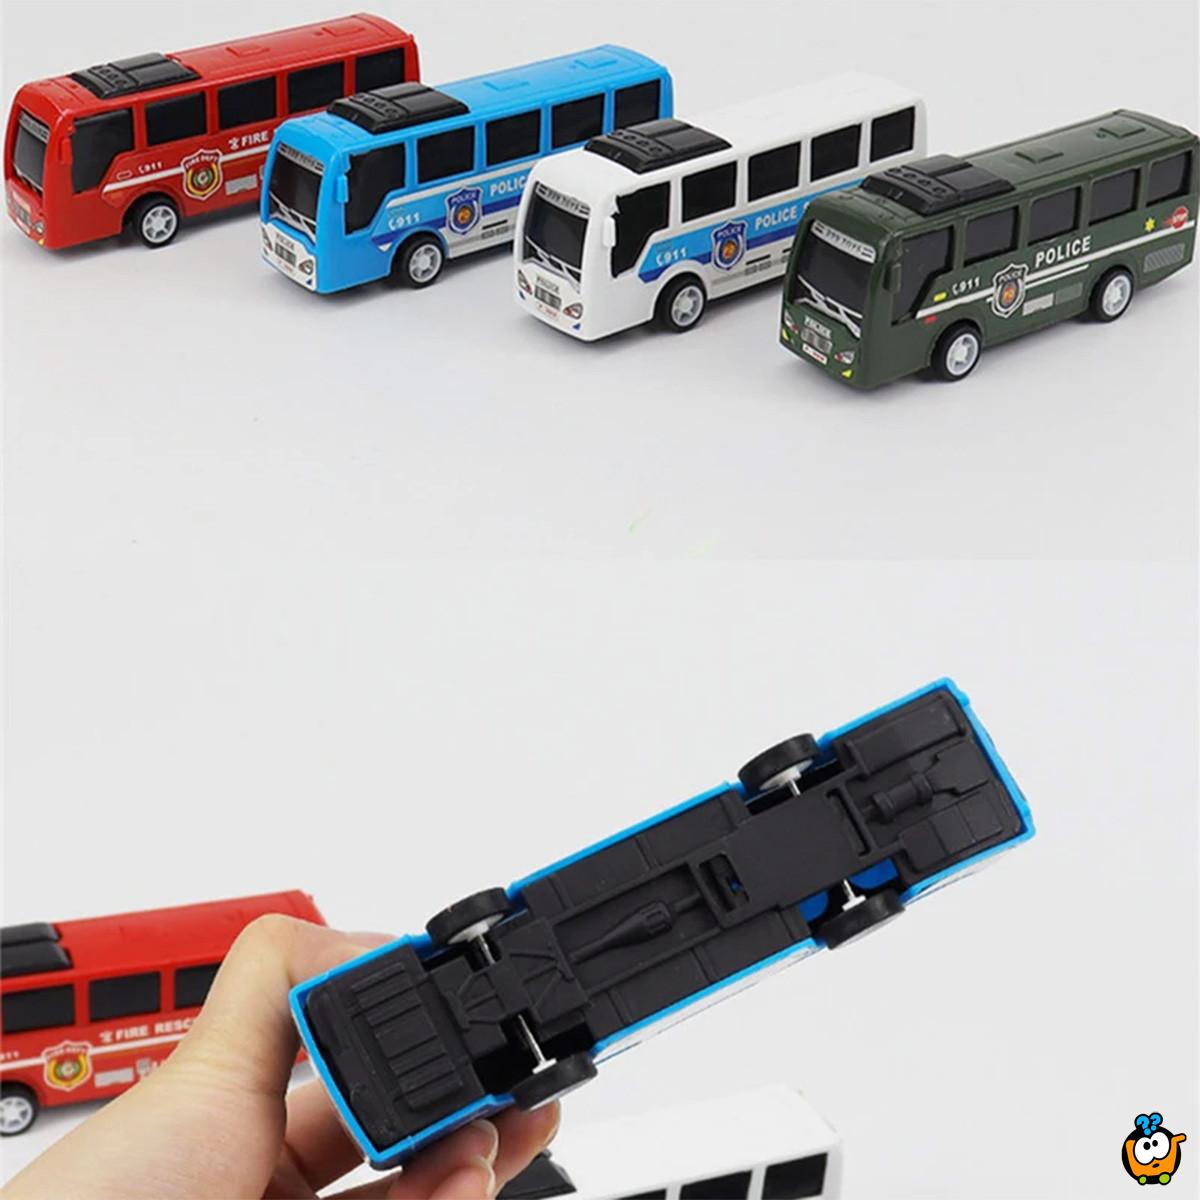 Bus Toy - Igračka mini autobus sa mehanizmom povlačenja